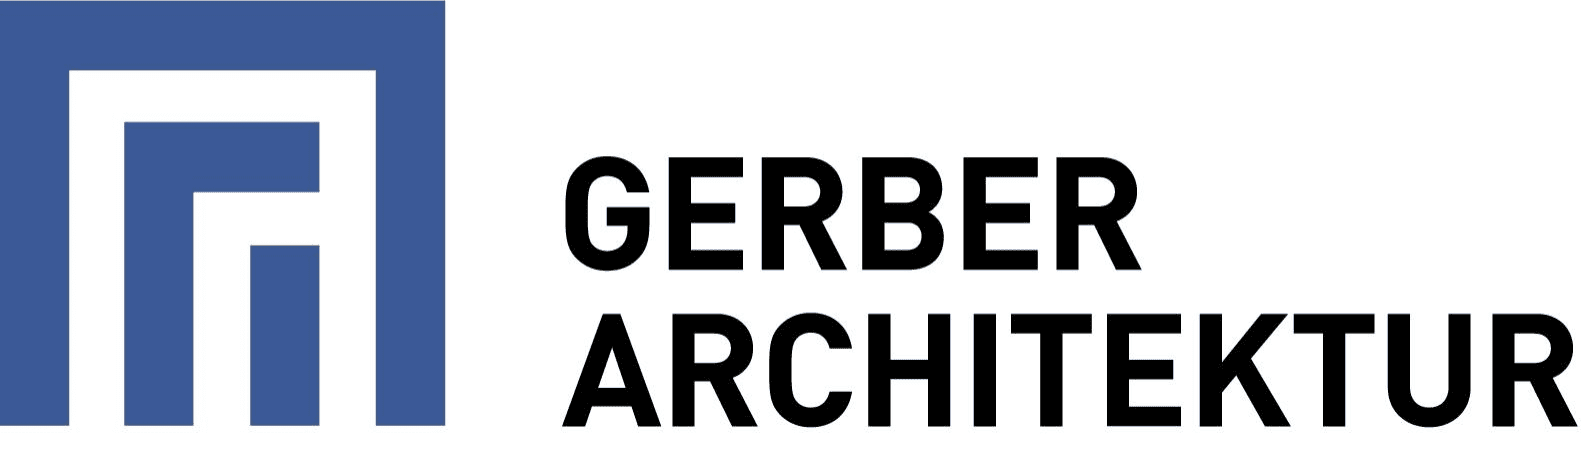 Fritz Gerber Architektur AG